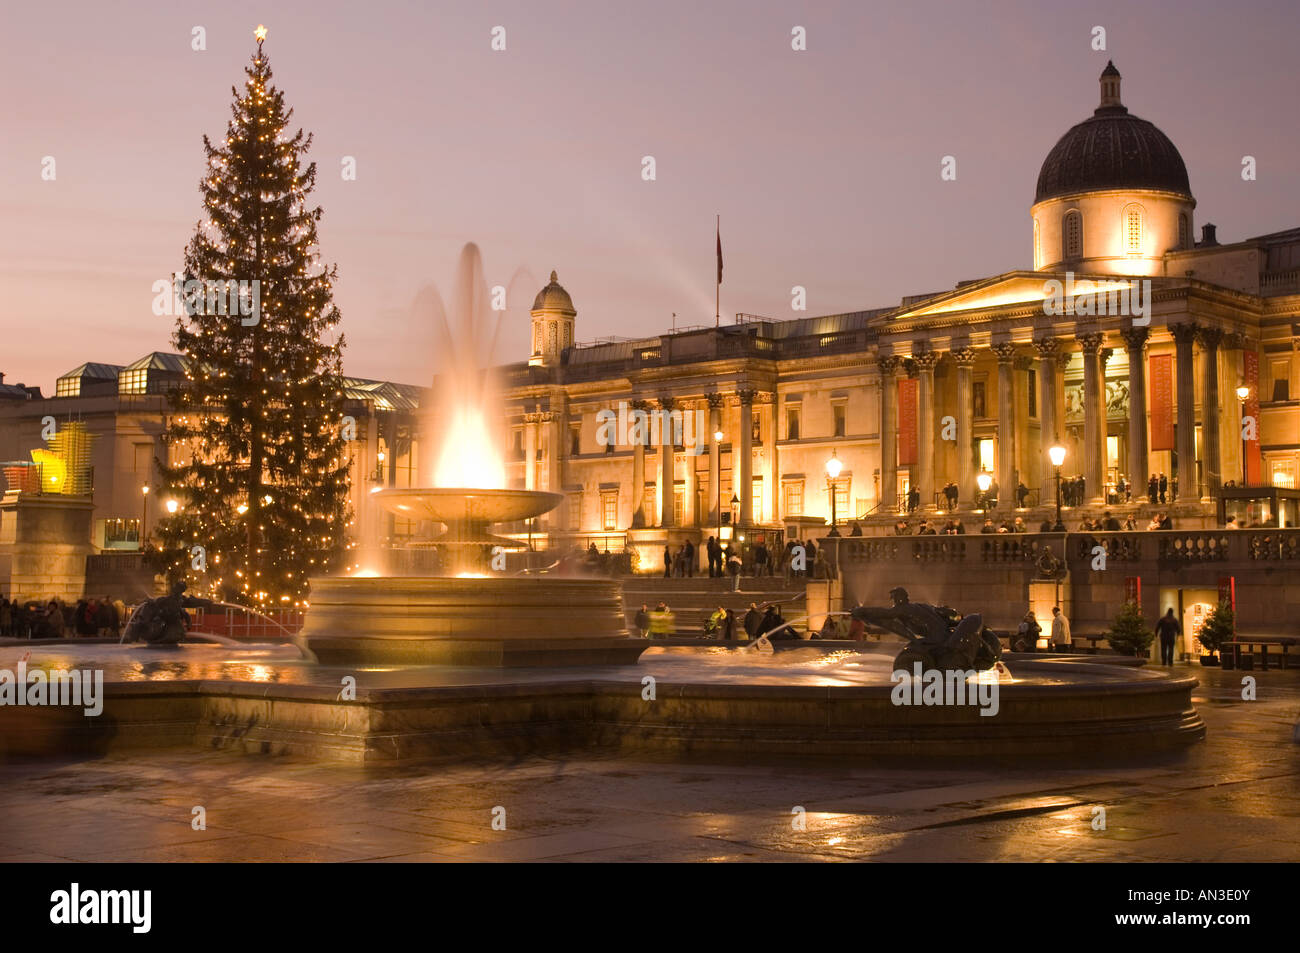 Trafalgar Square in London, UK. Christmas. Stock Photo